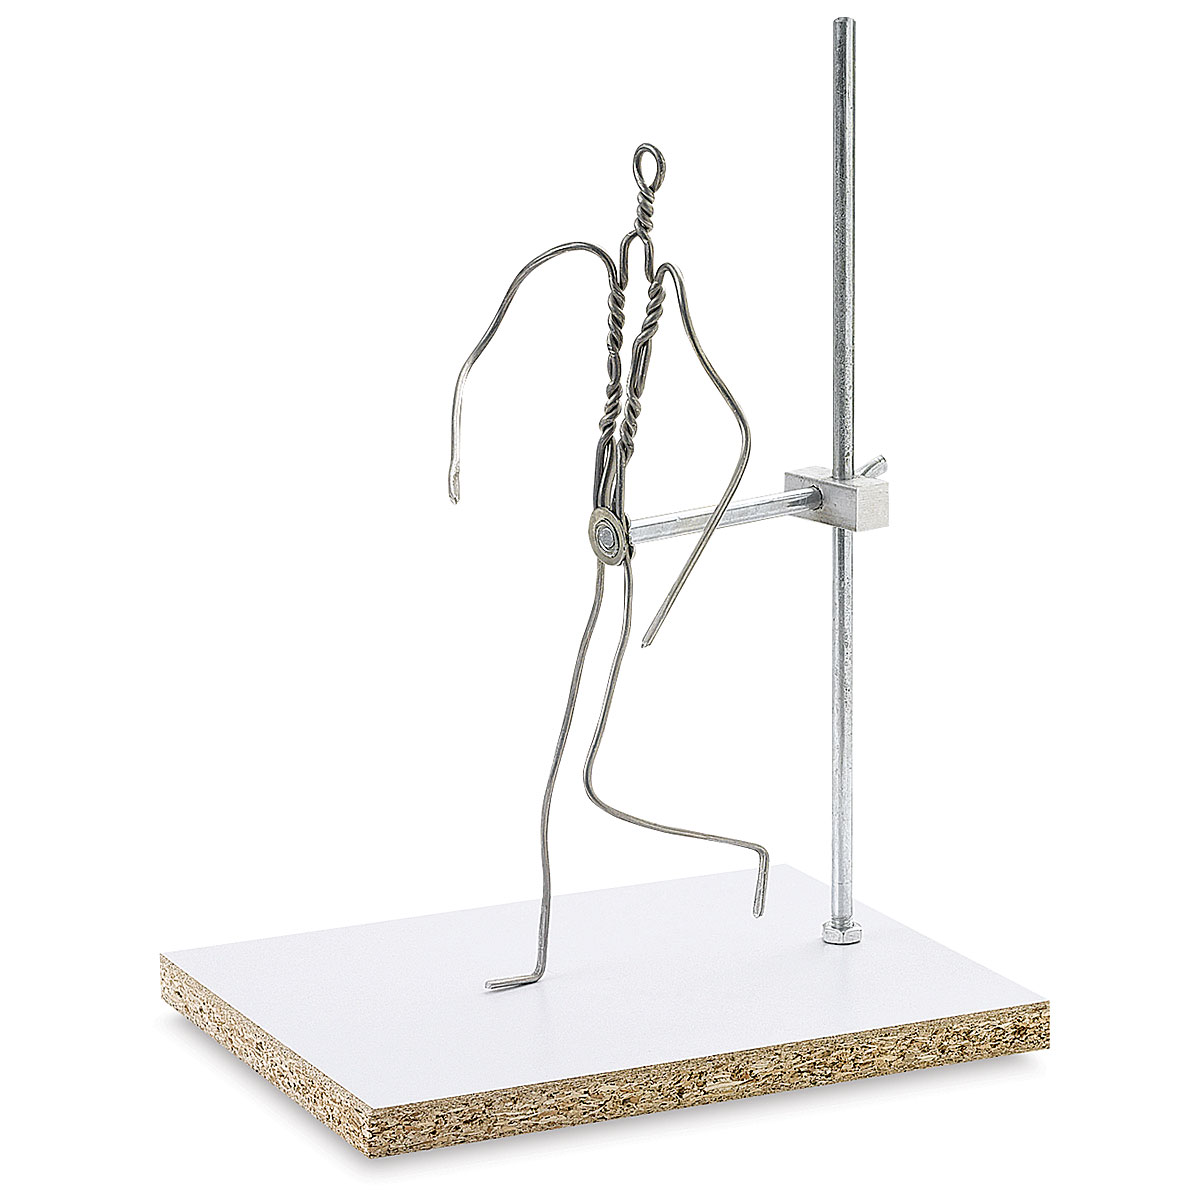 How to Create a Balancing Sculpture Armature - FeltMagnet